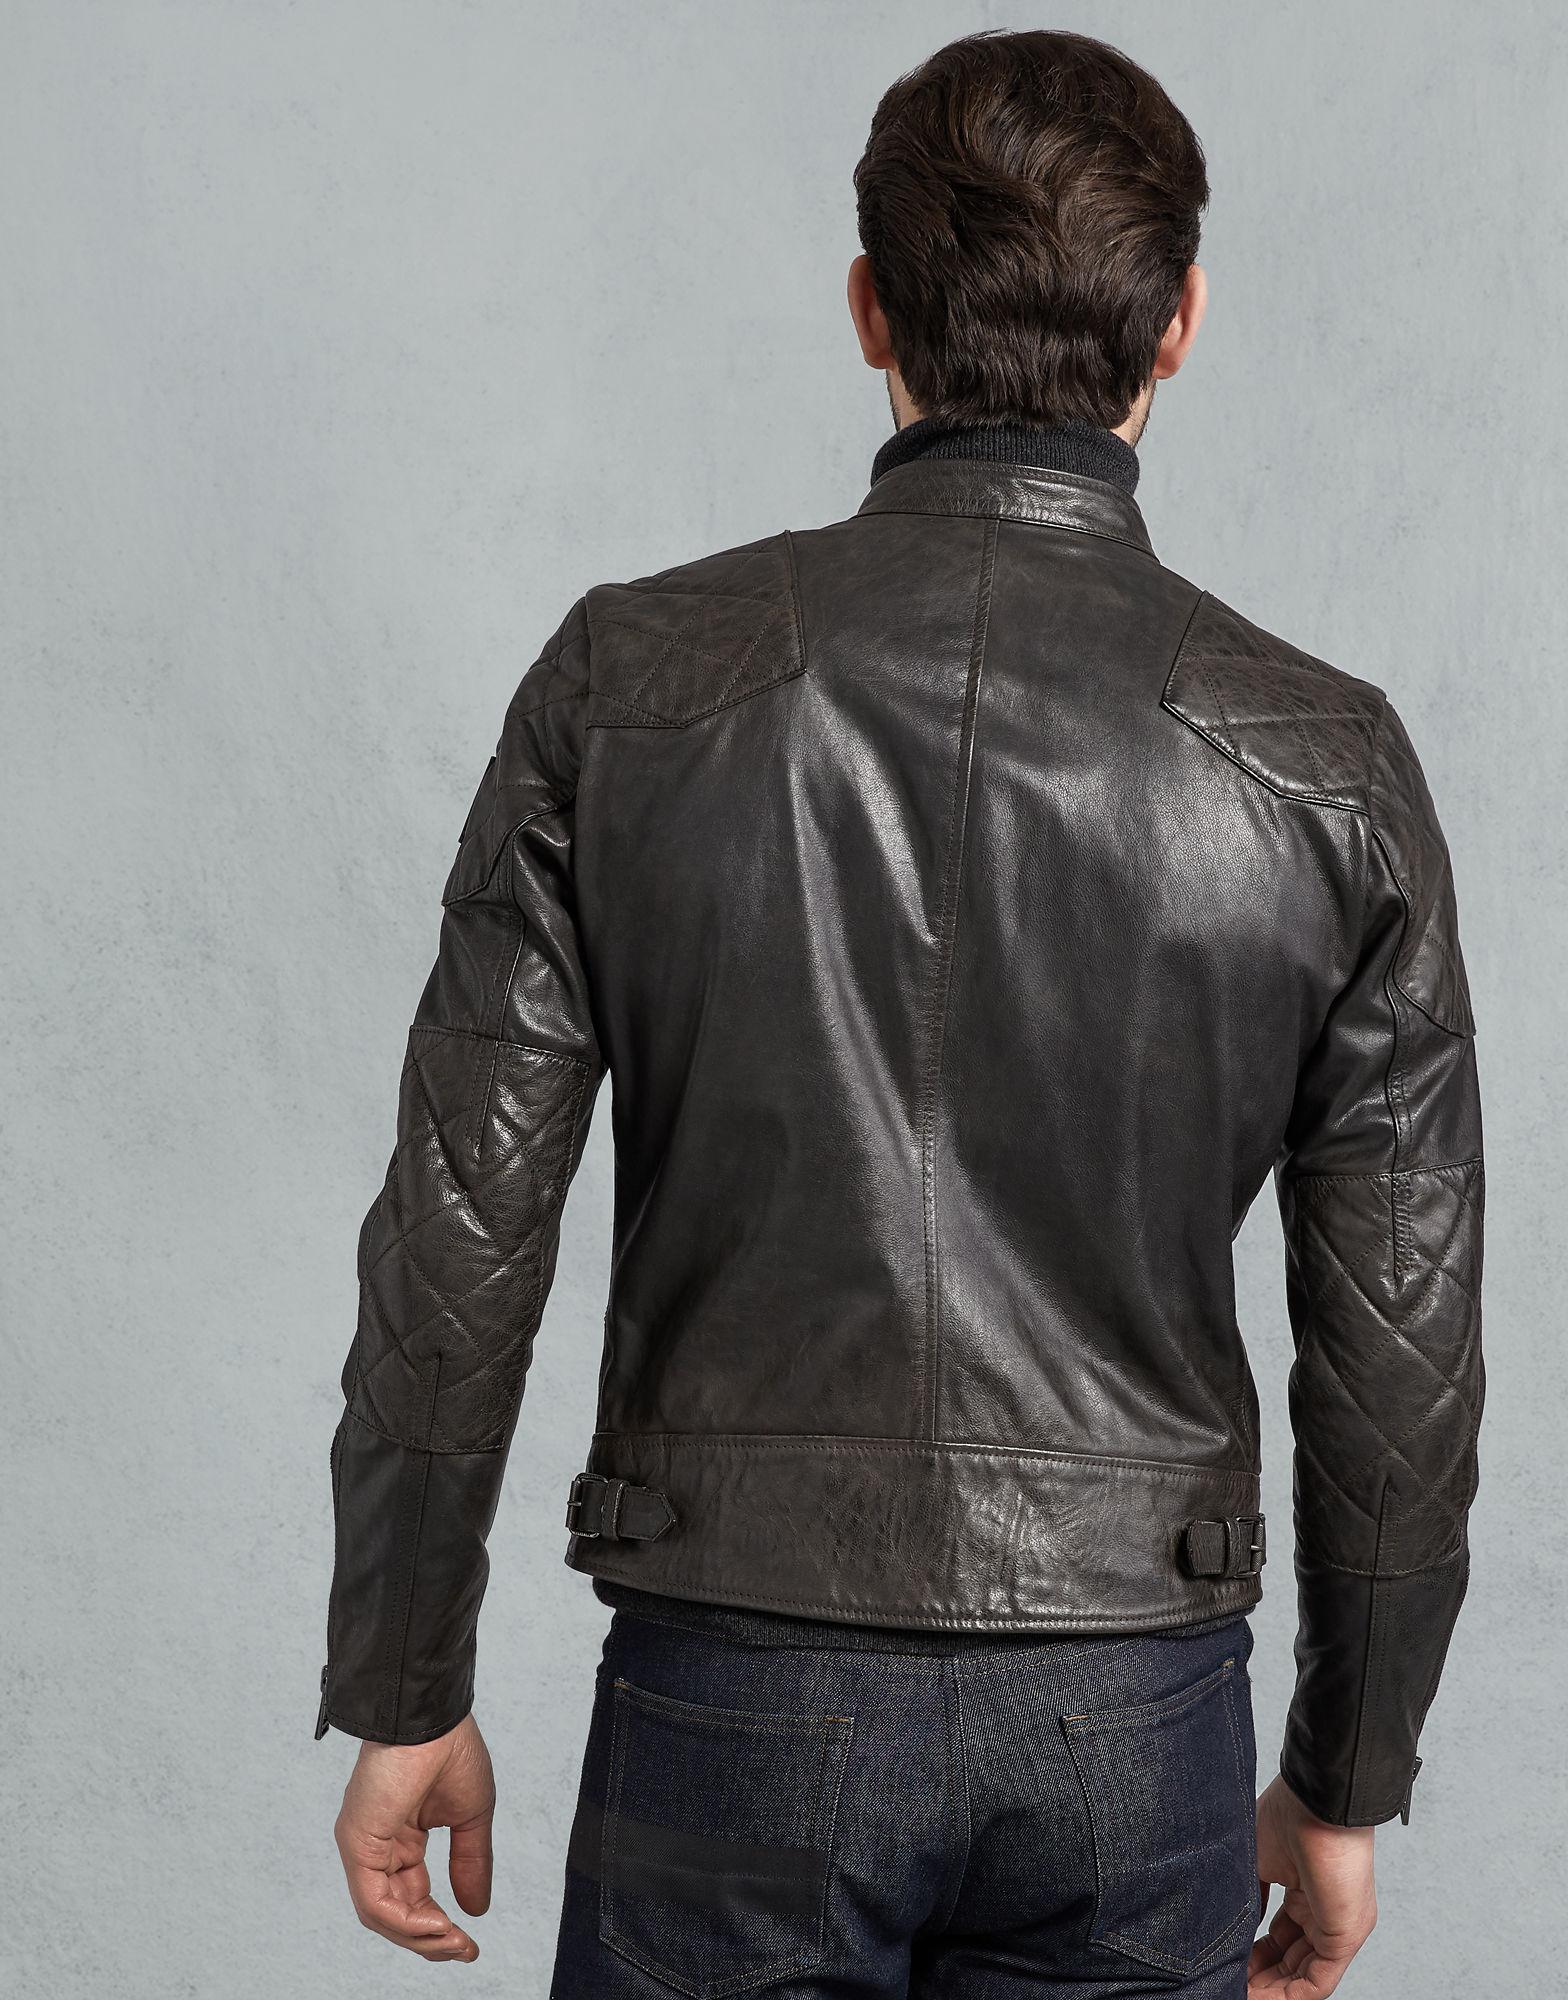 Belstaff Outlaw Leather Jacket in Black for Men - Lyst